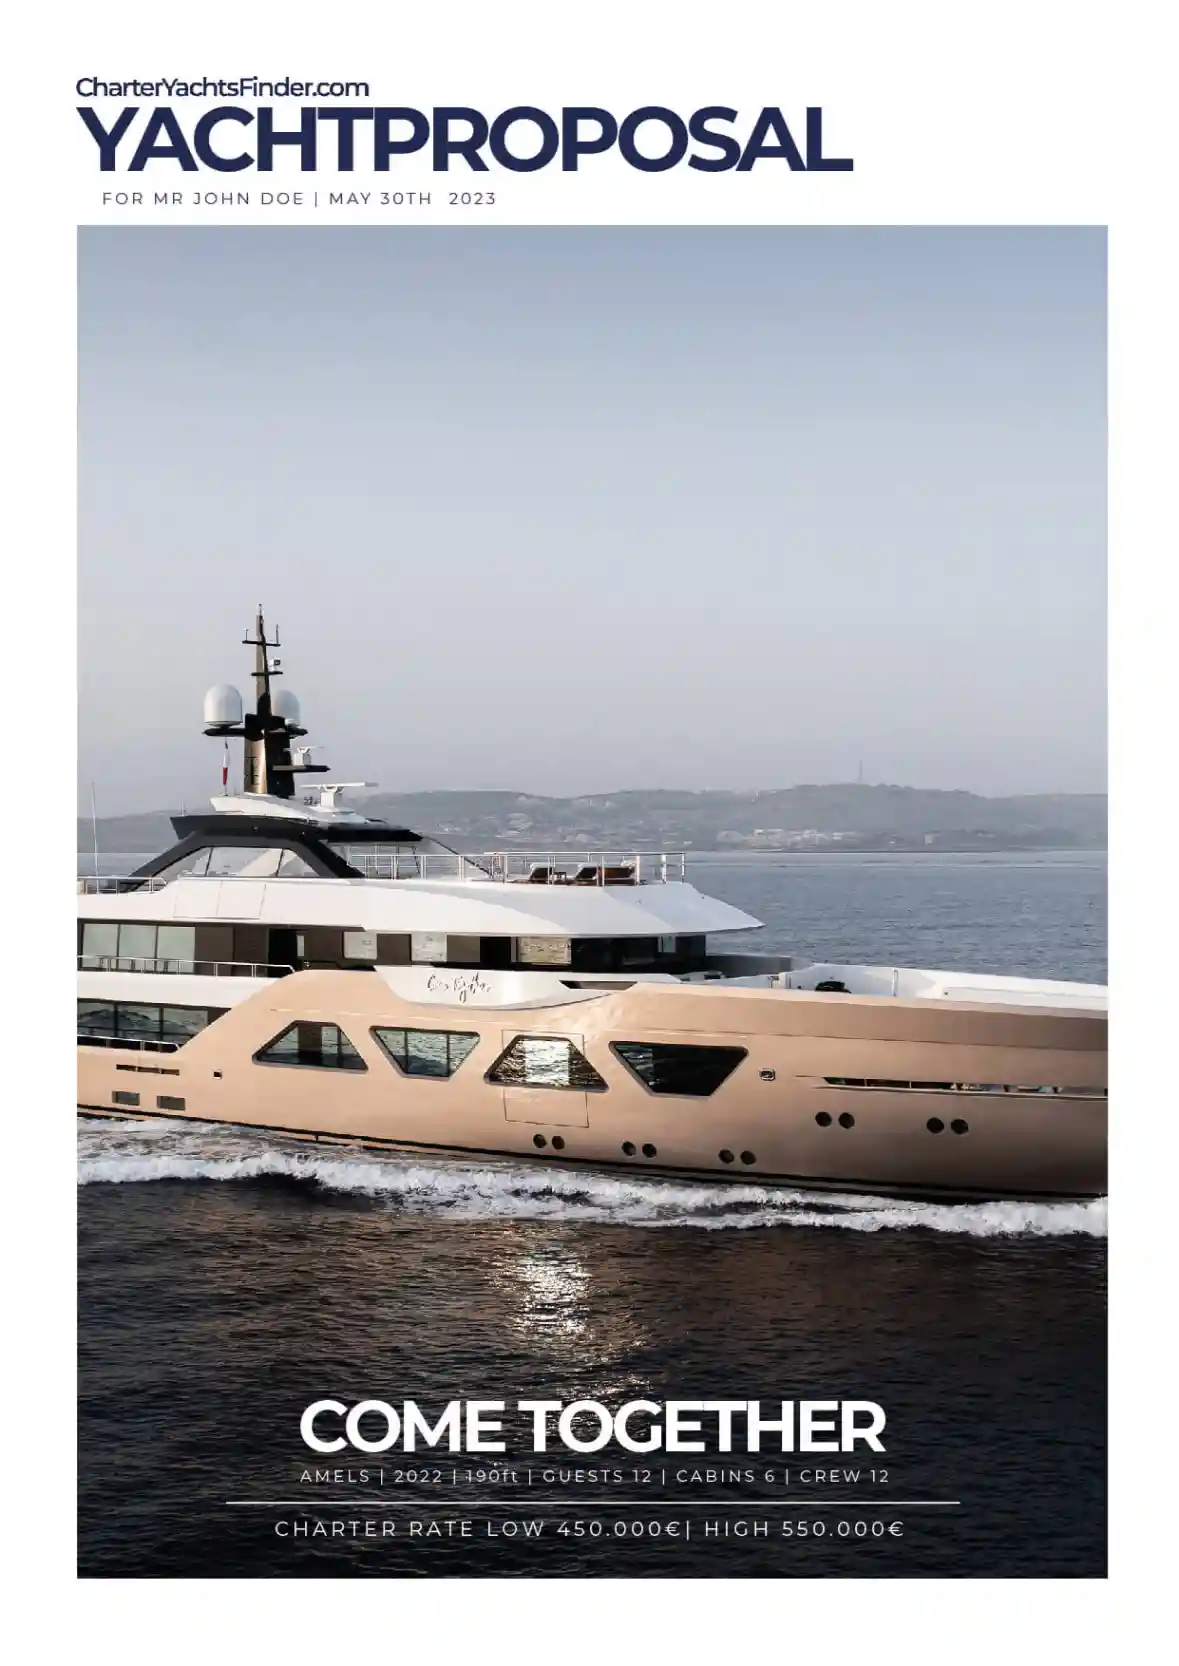 Yacht Proposal Charteryachtsfinder.com